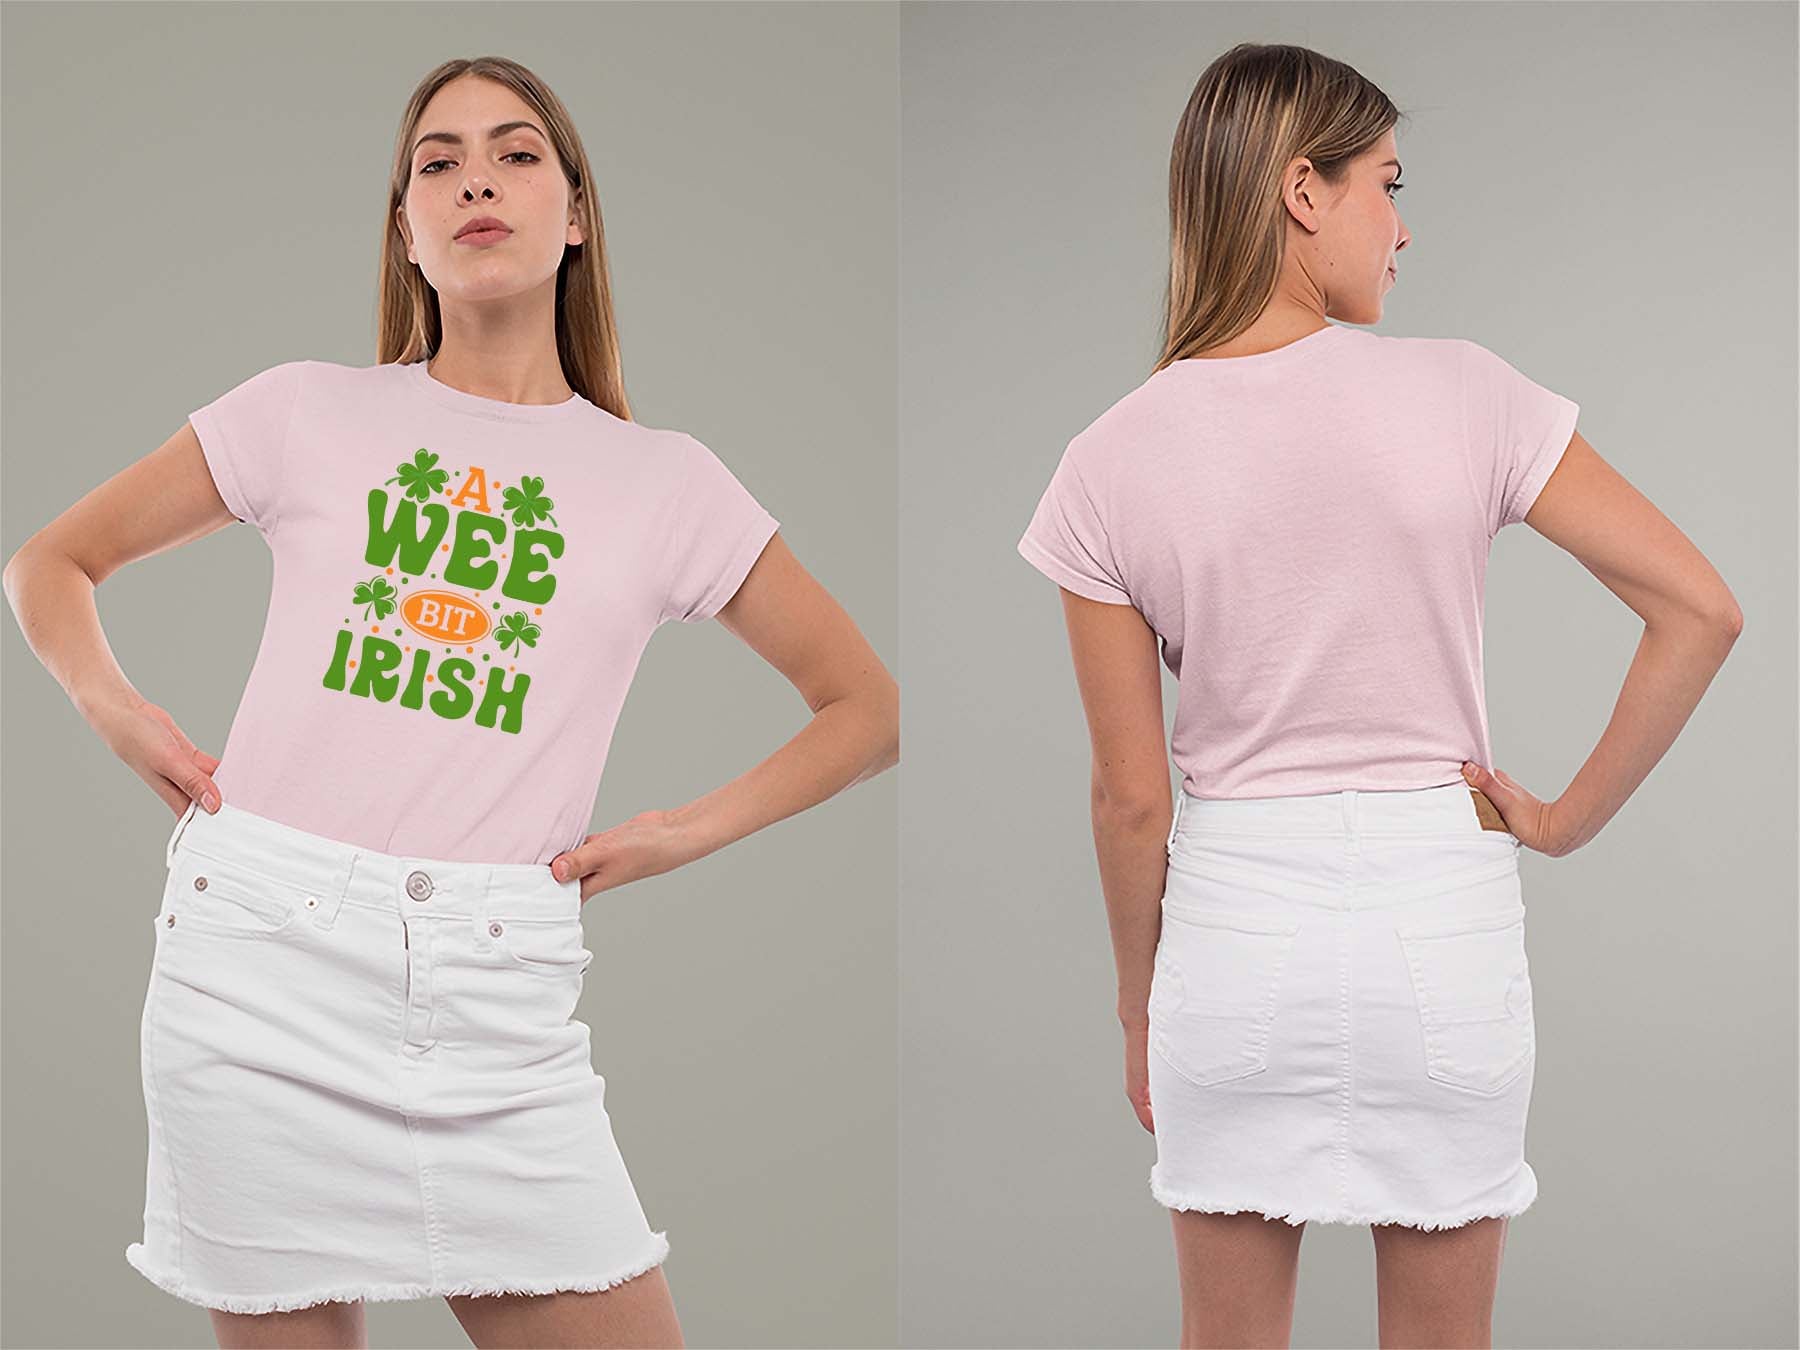 A Wee Bit Irish Ladies Crew (Round) Neck Shirt Small Light Pink